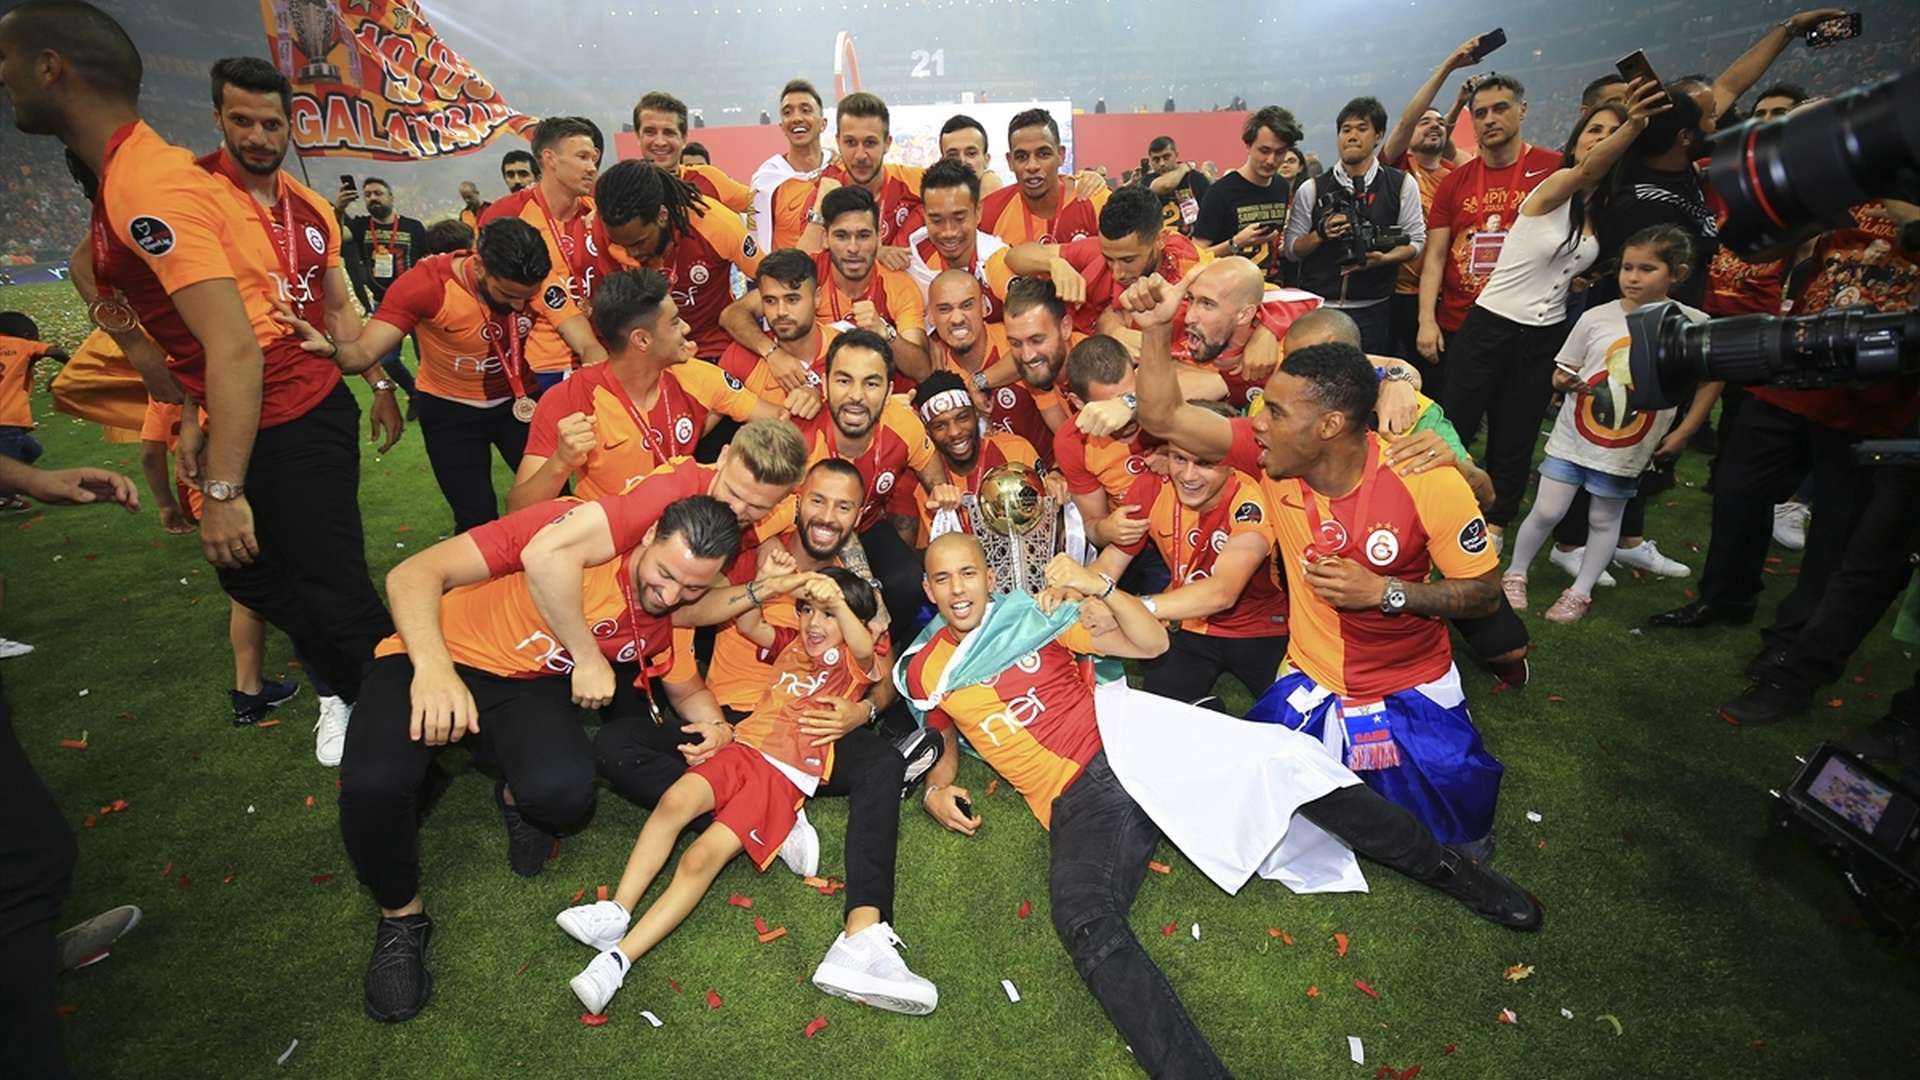 Galatasaray championship ceremony